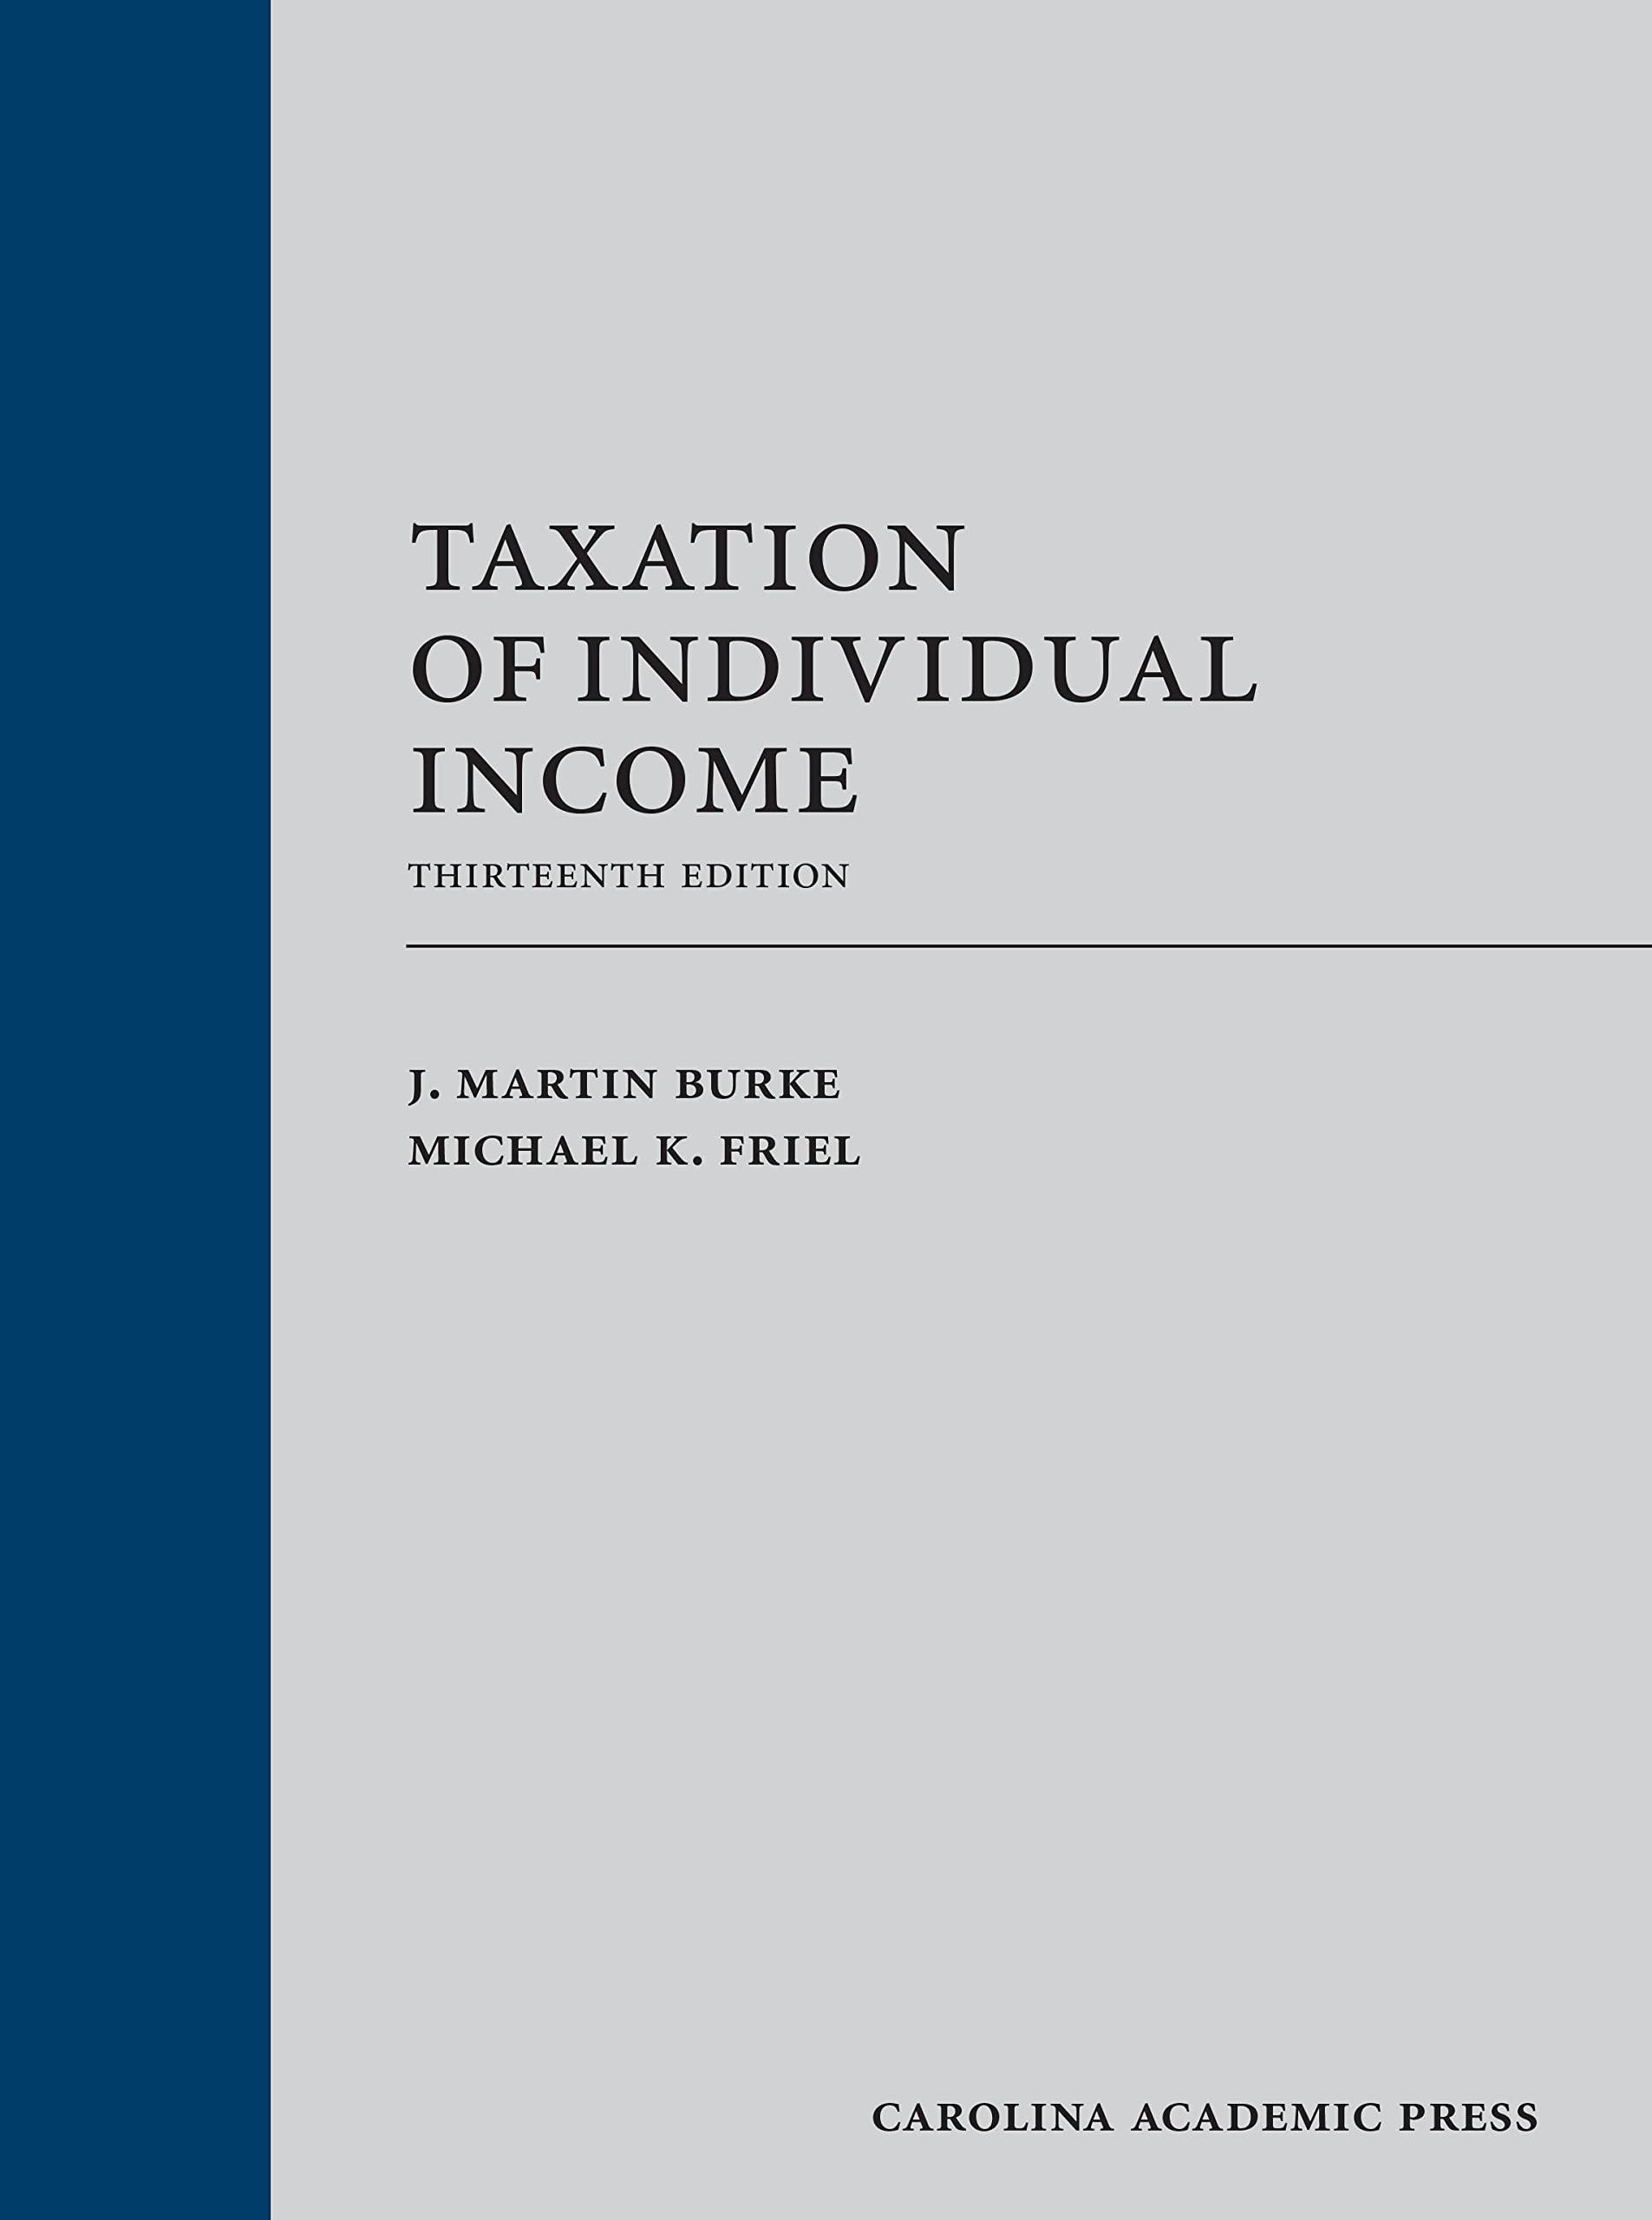 taxation of individual income 13th edition j. martin burke, michael friel 1531025072, 9781531025076